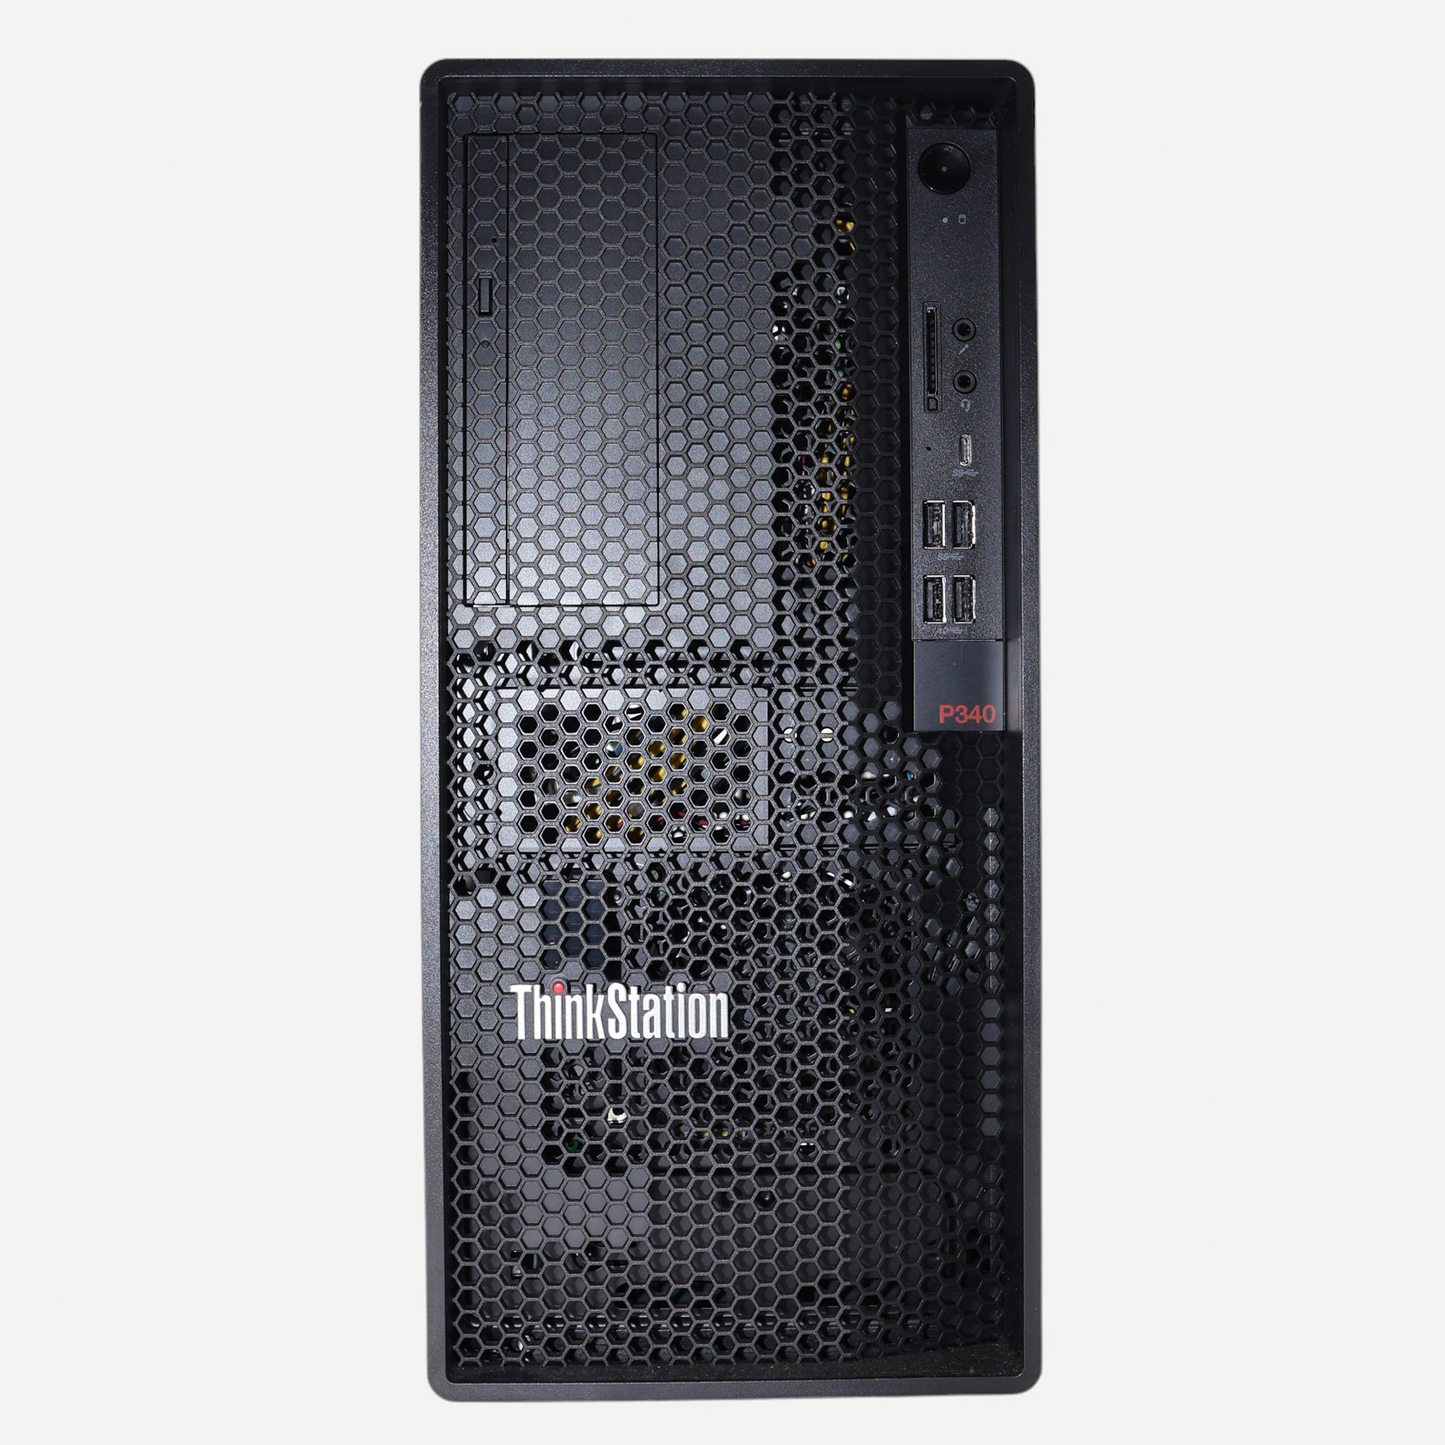 Lenovo ThinkStation P340 i7-10700K 16GB RAM 512GB SSD Win 10 Pro Desktop PC